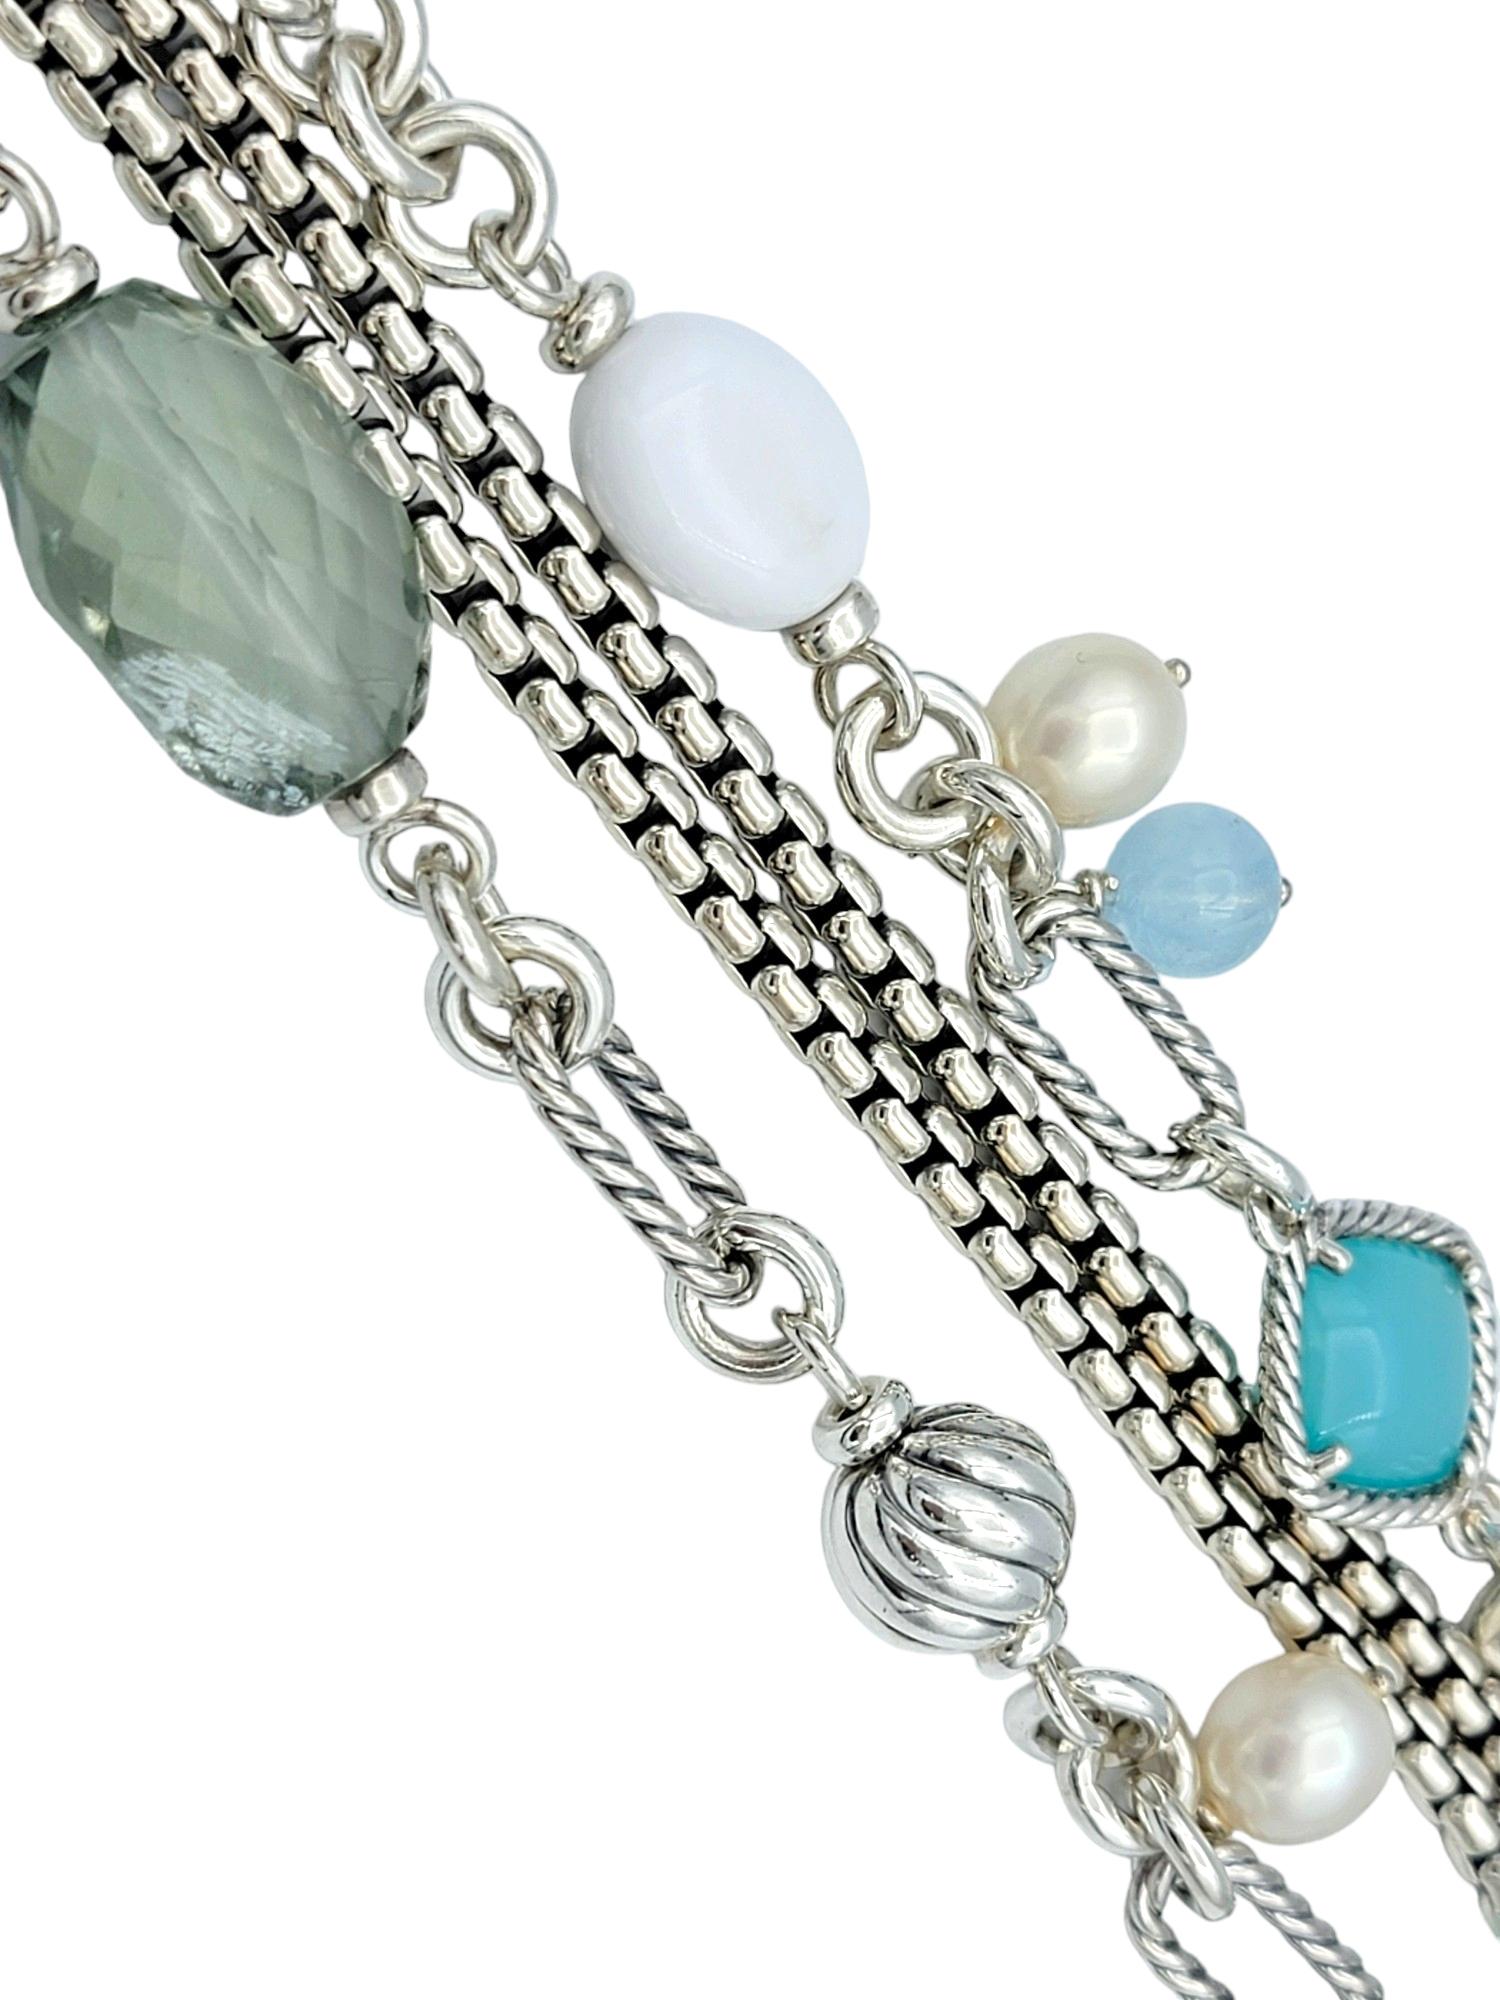 Women's David Yurman Bijoux Multi-Strand Sterling Silver Bracelet with Gemstones 